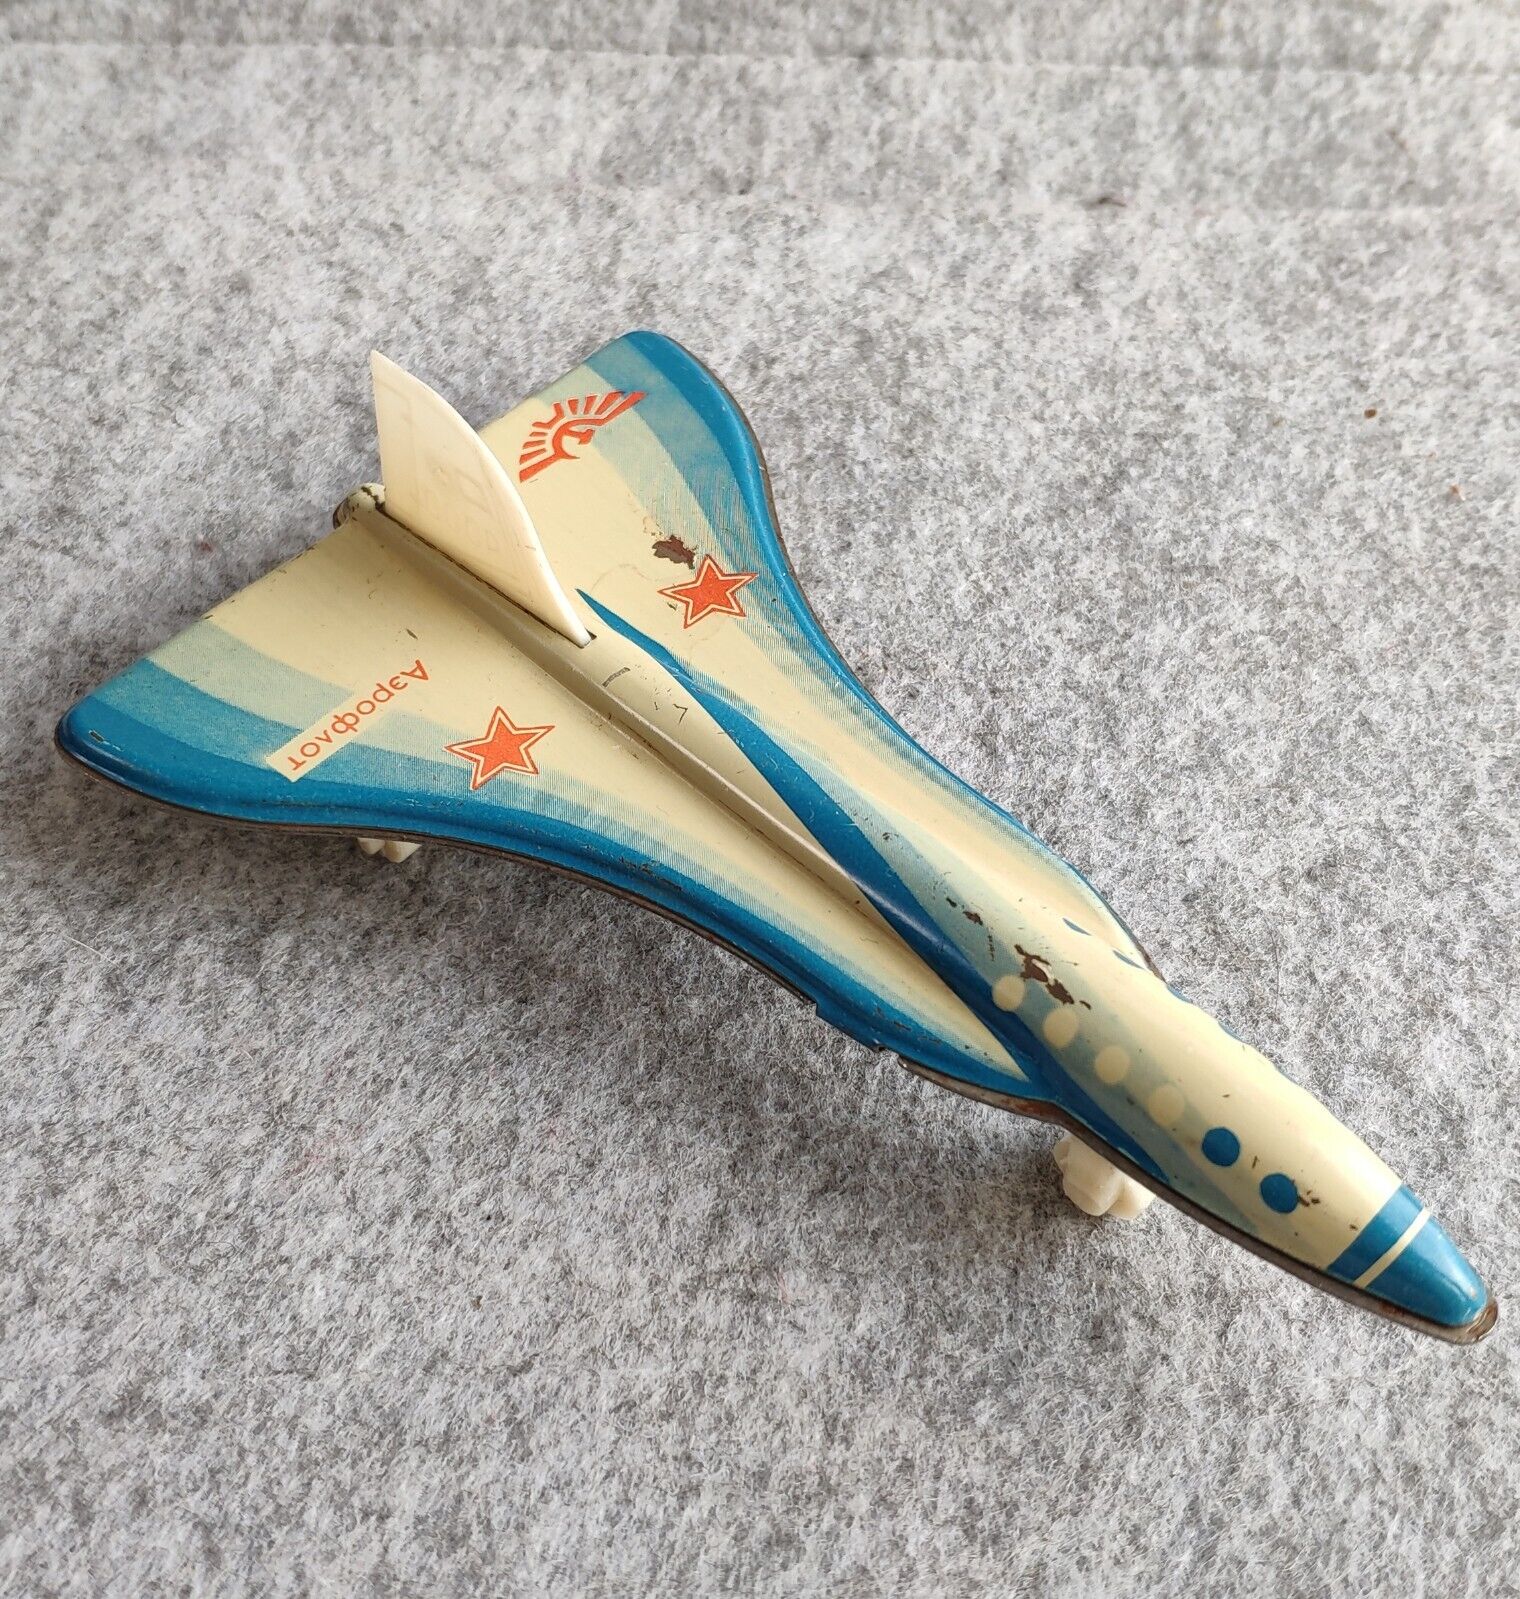 Vintage  plane model aeroflot USSR Retro collectible toy 